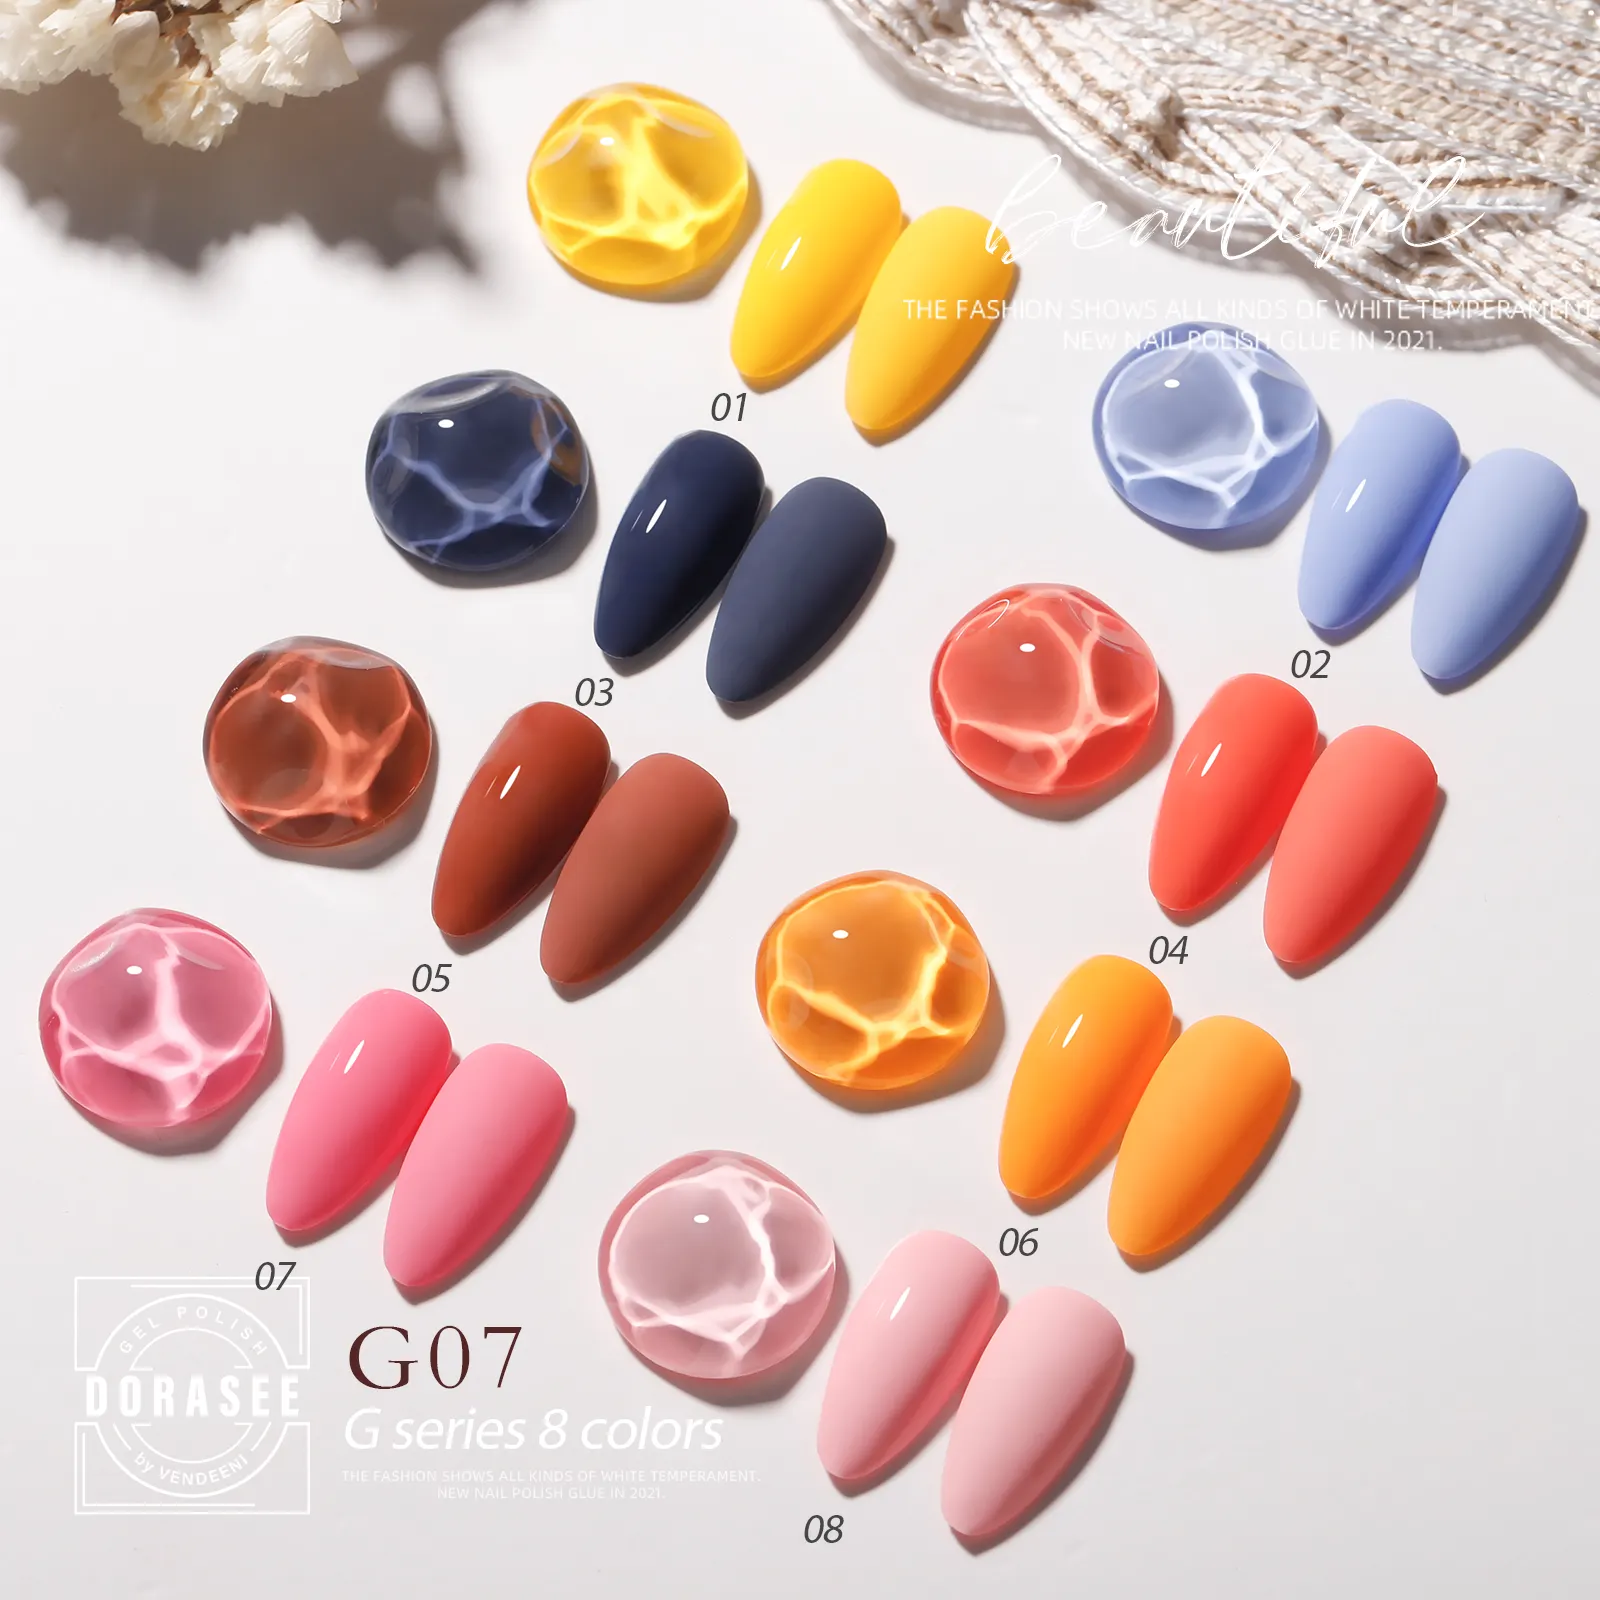 Productie Gratis Sample Mode G Serie 8-Kleuren Nagellak Art Product Set Nail Gel Polish Voor Salon Kleur